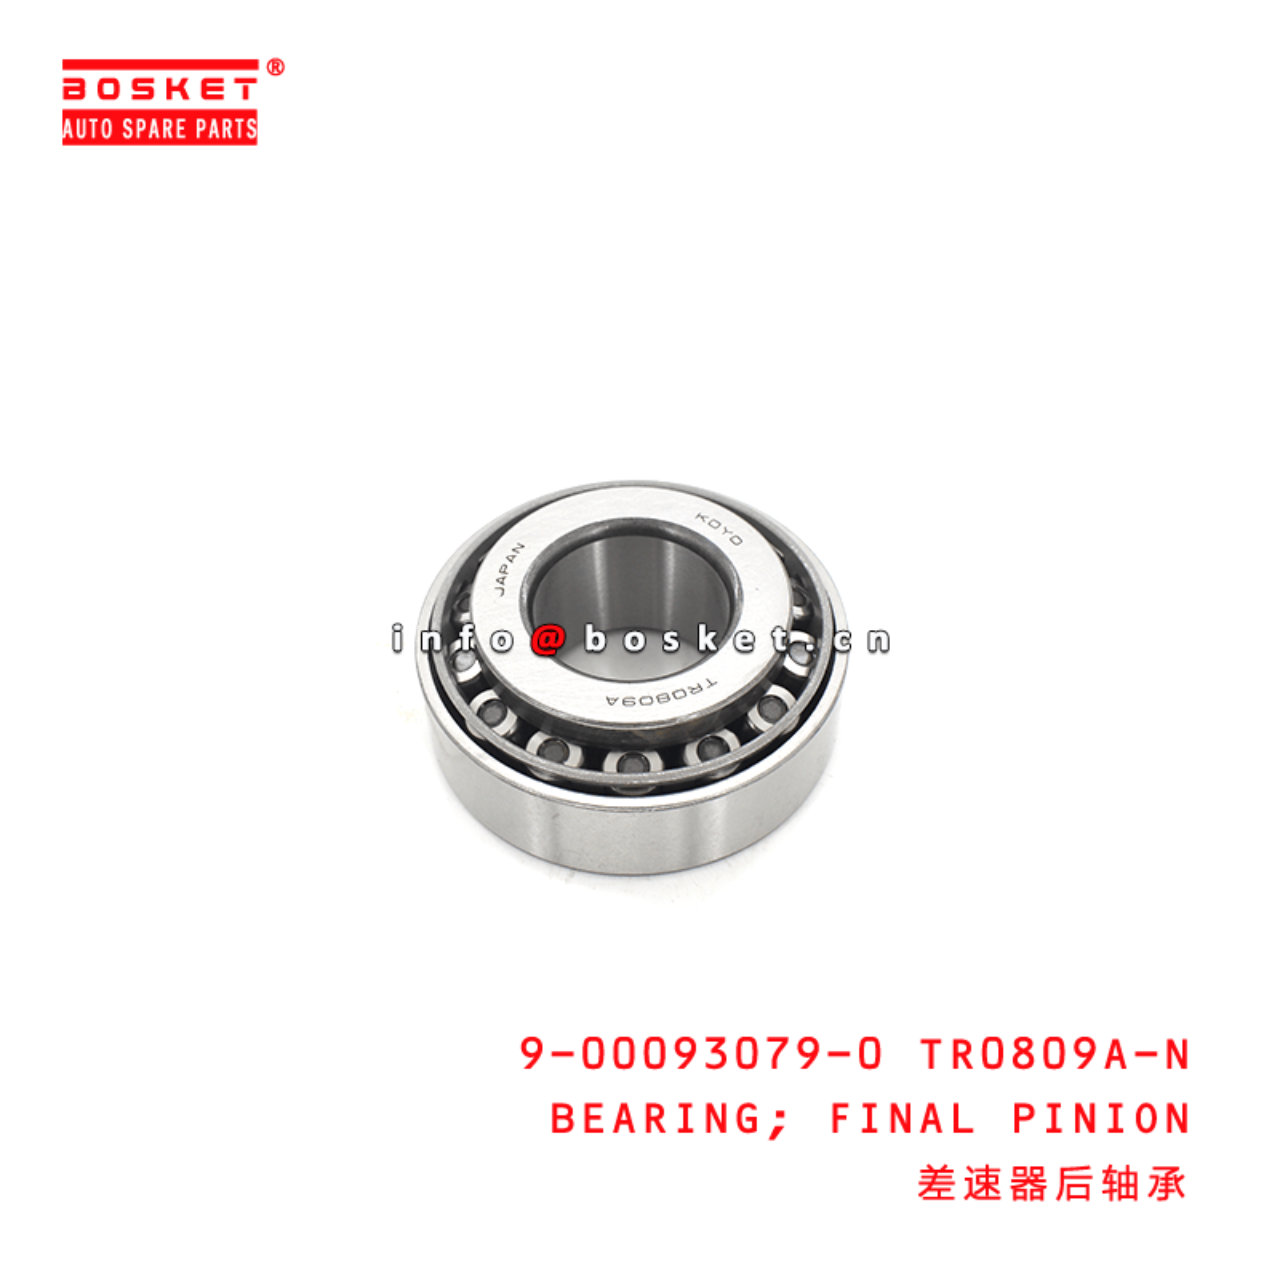 9-00093079-0 Final Pinion Bearing 9000930790 Suitable for ISUZU NHR54 4JA1